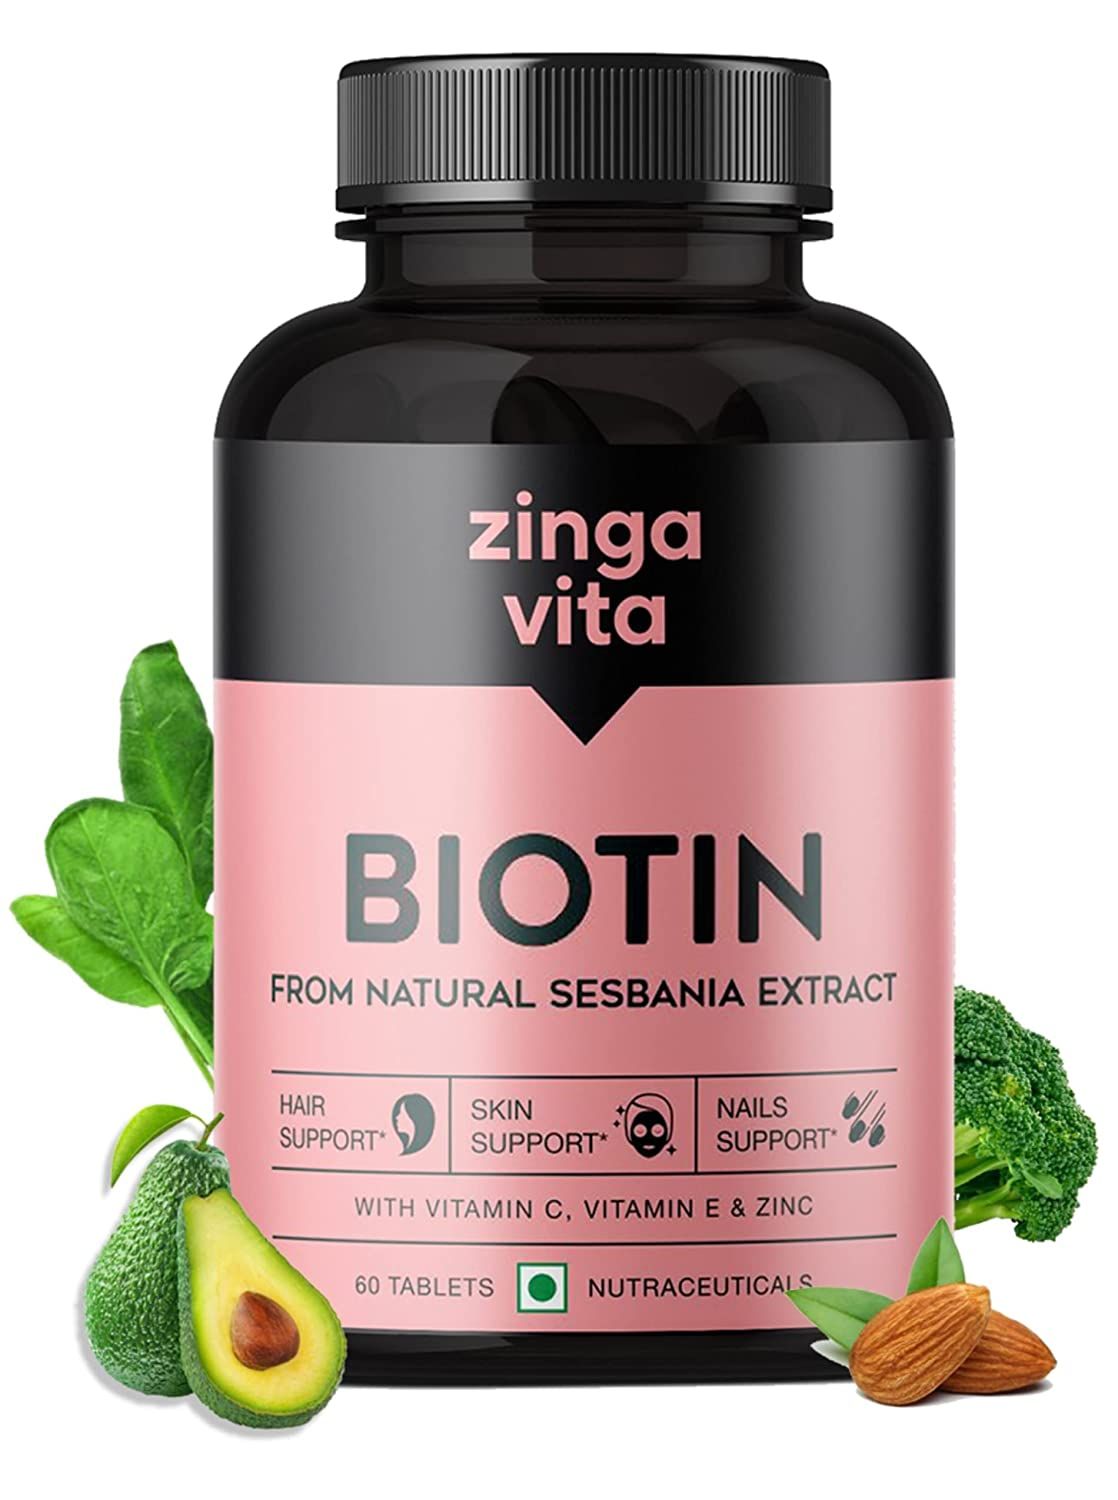 Zingavita Plant Based Biotin Image